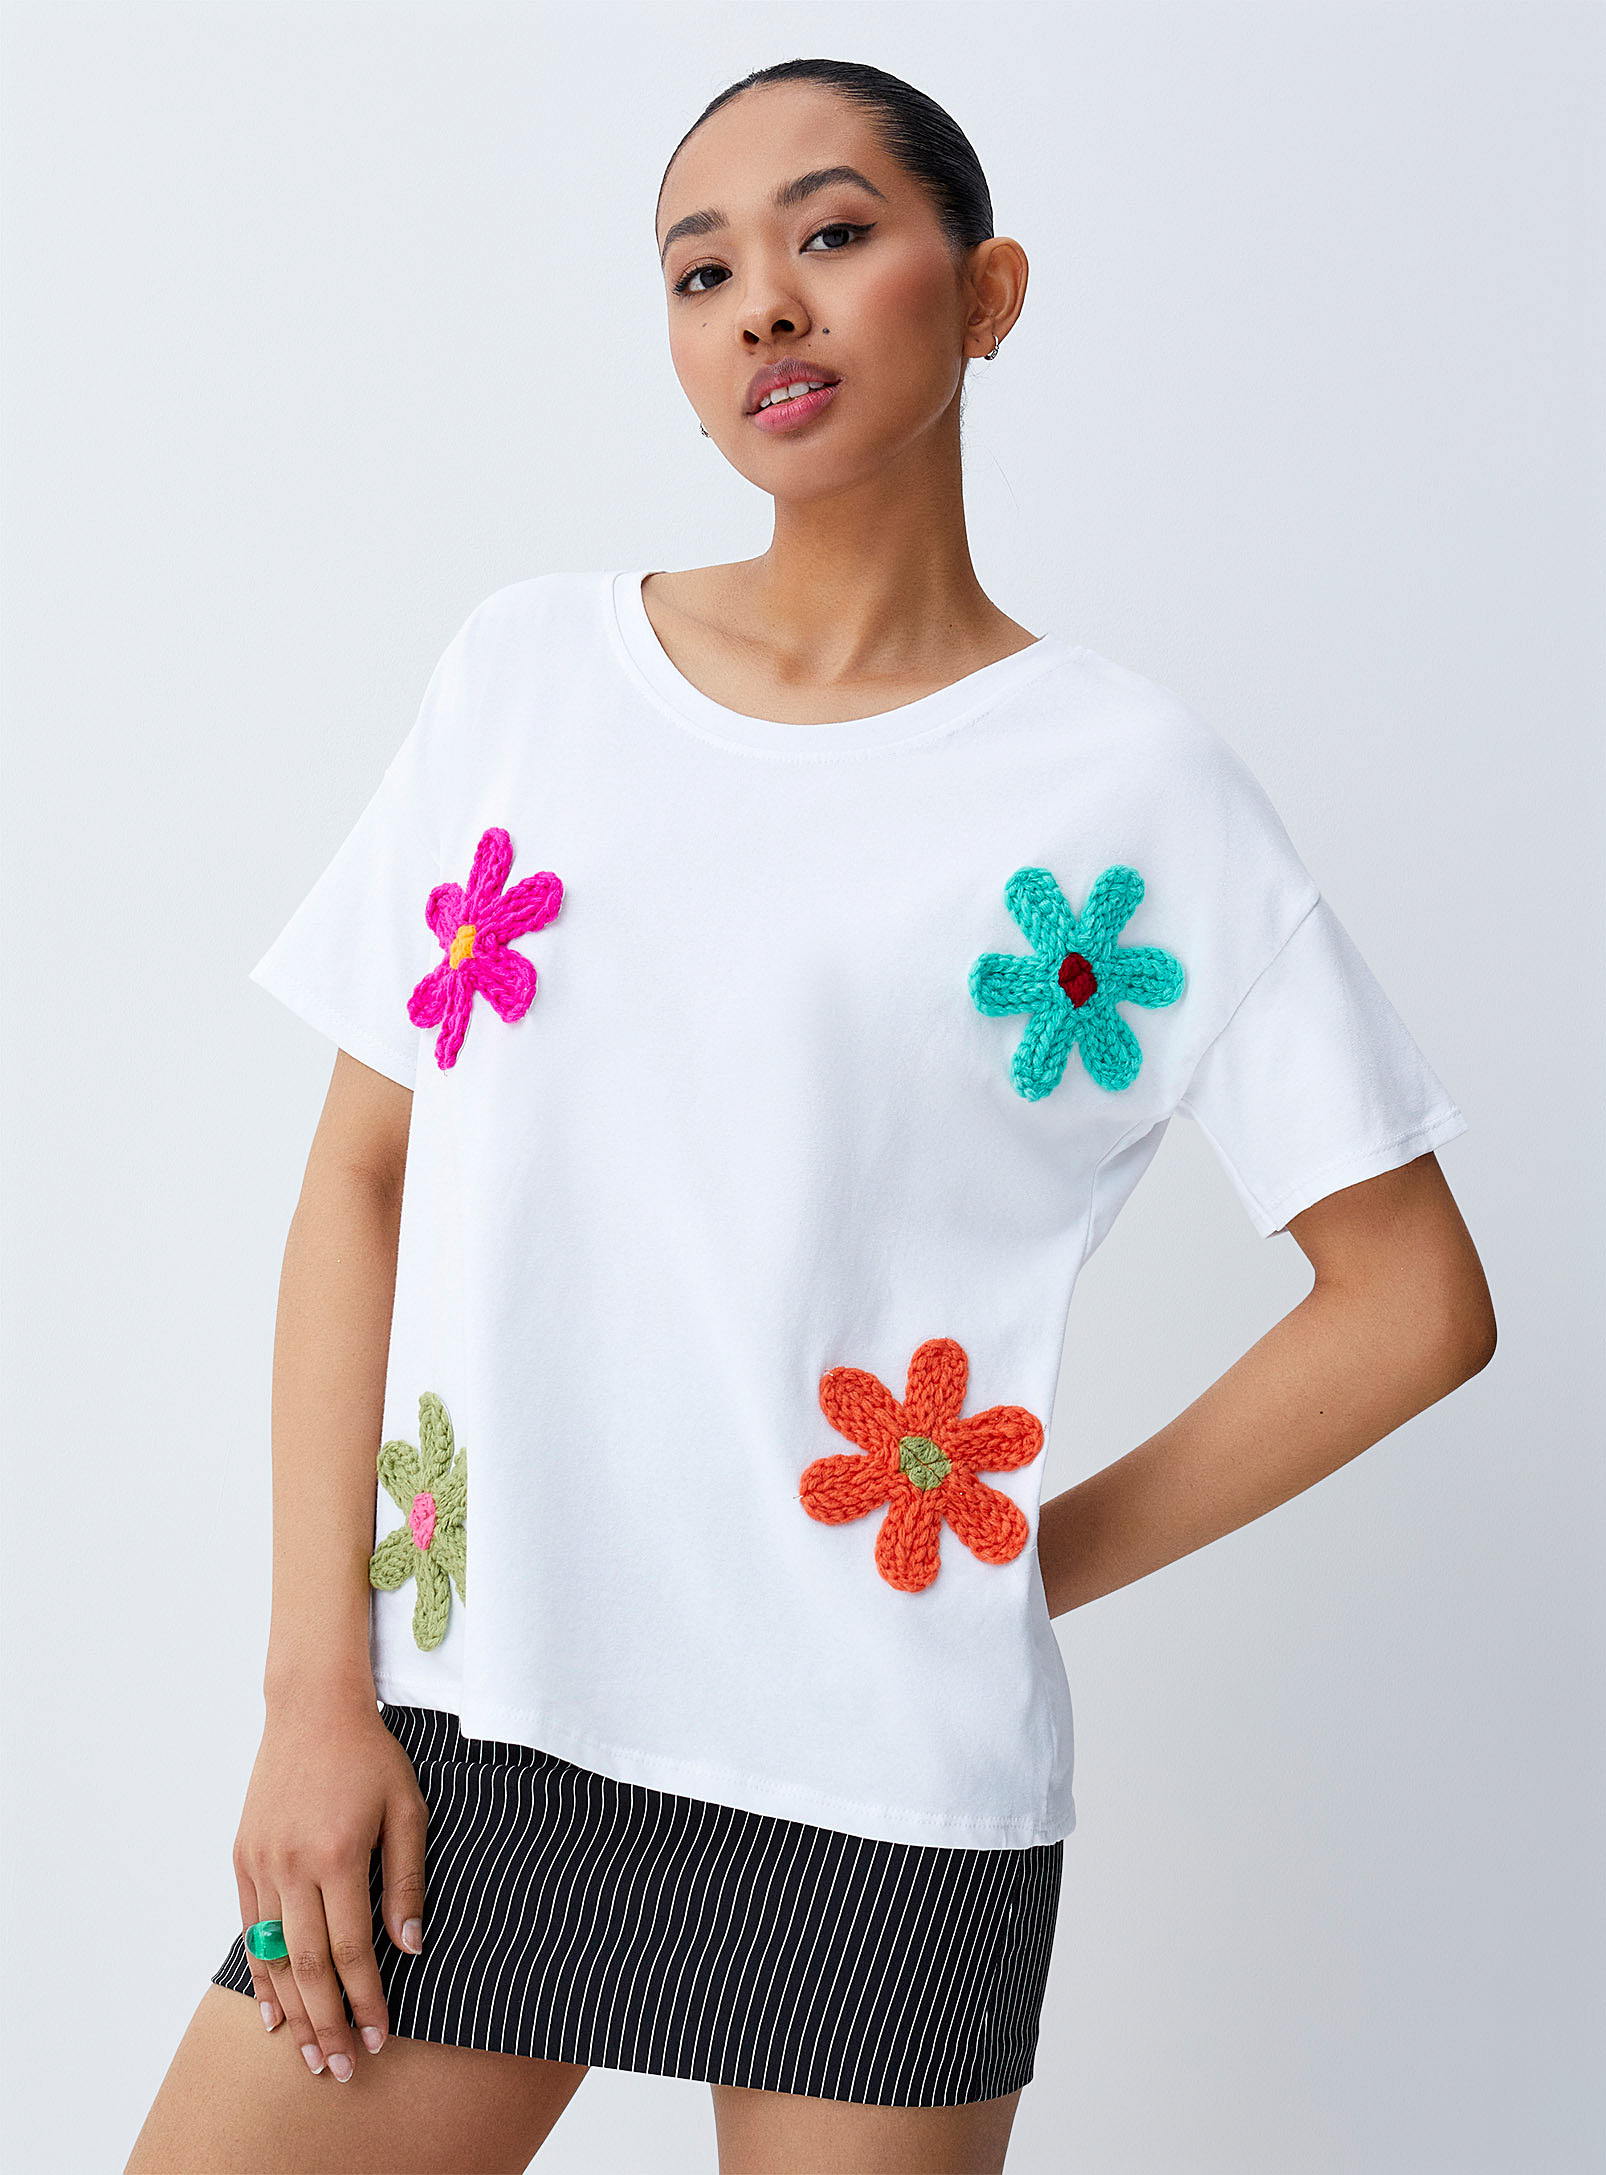 Twik - Women's Colourful crocheted flowers T-shirt